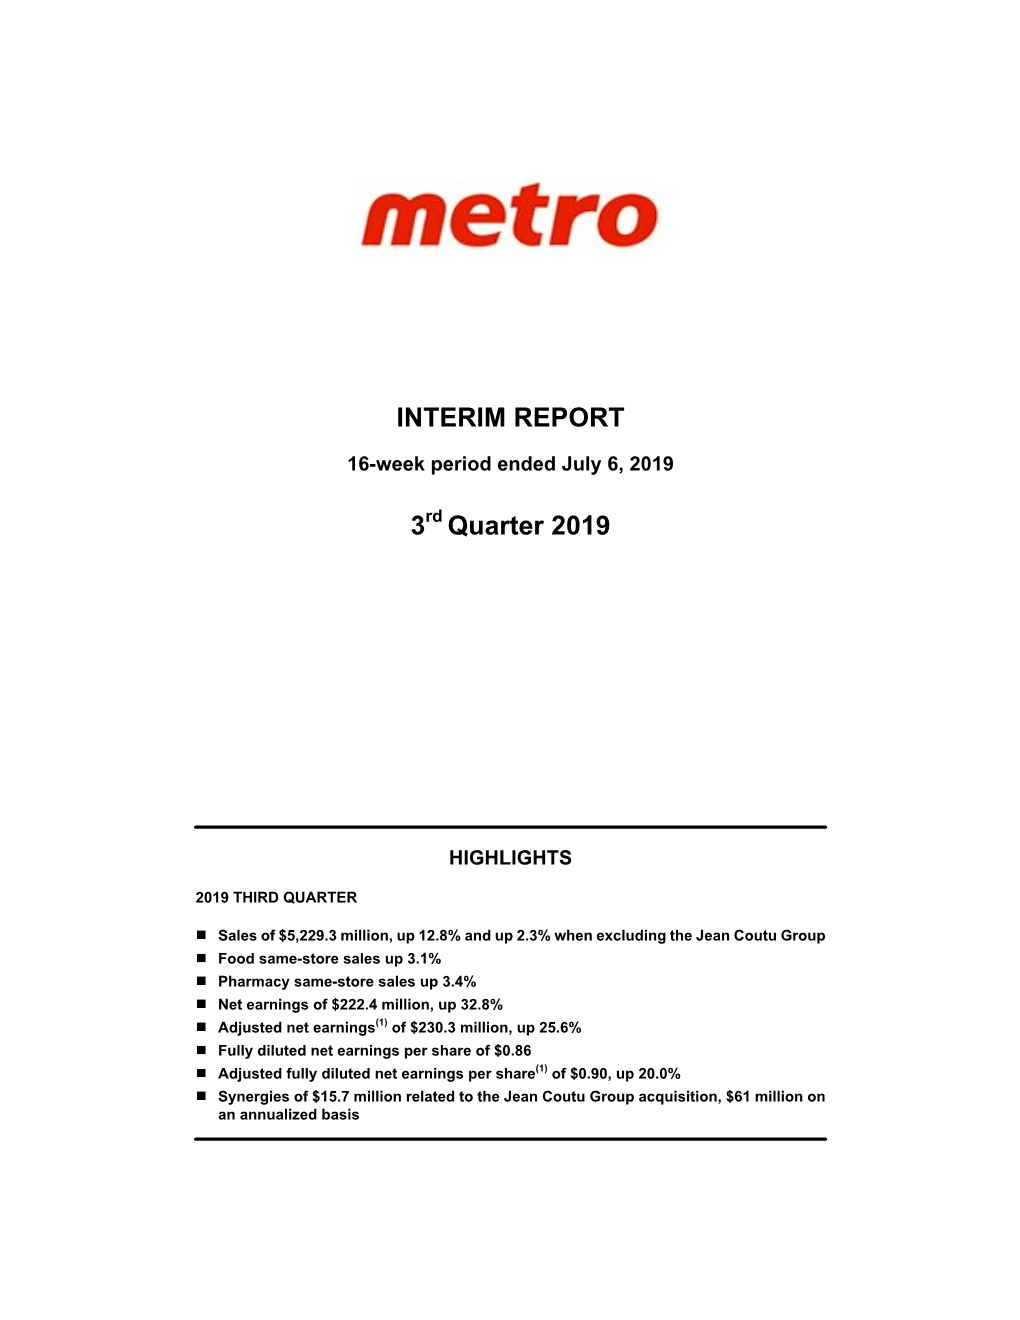 INTERIM REPORT 3Rd Quarter 2019